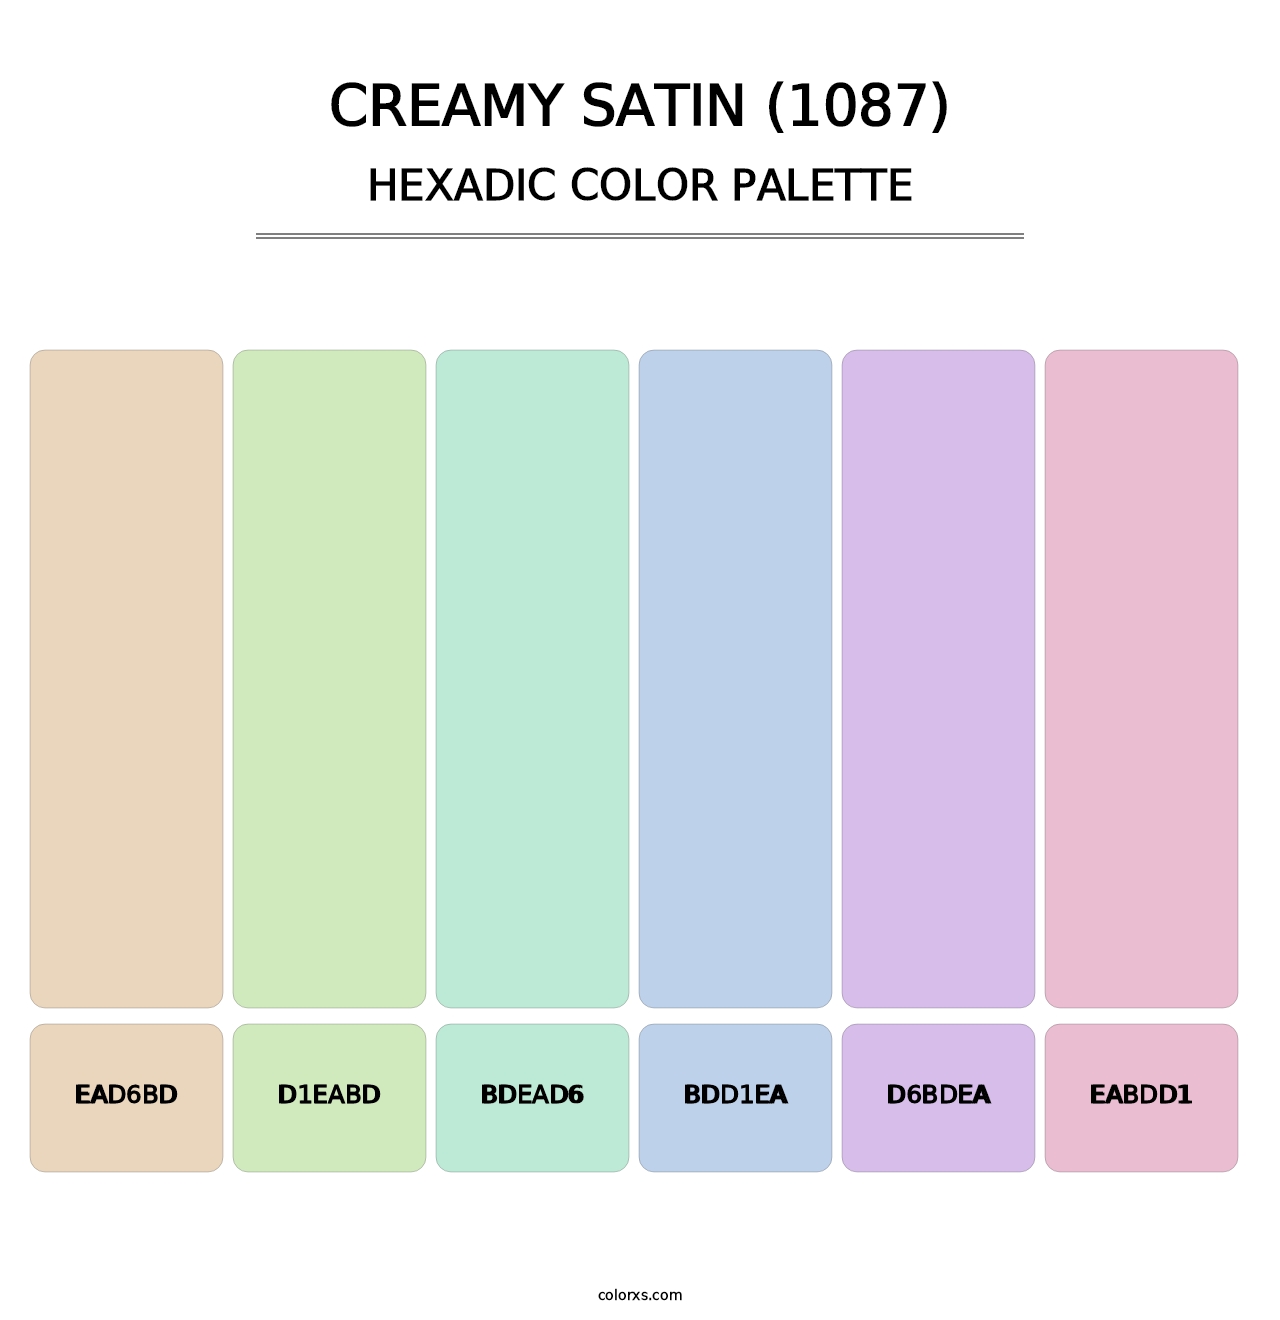 Creamy Satin (1087) - Hexadic Color Palette